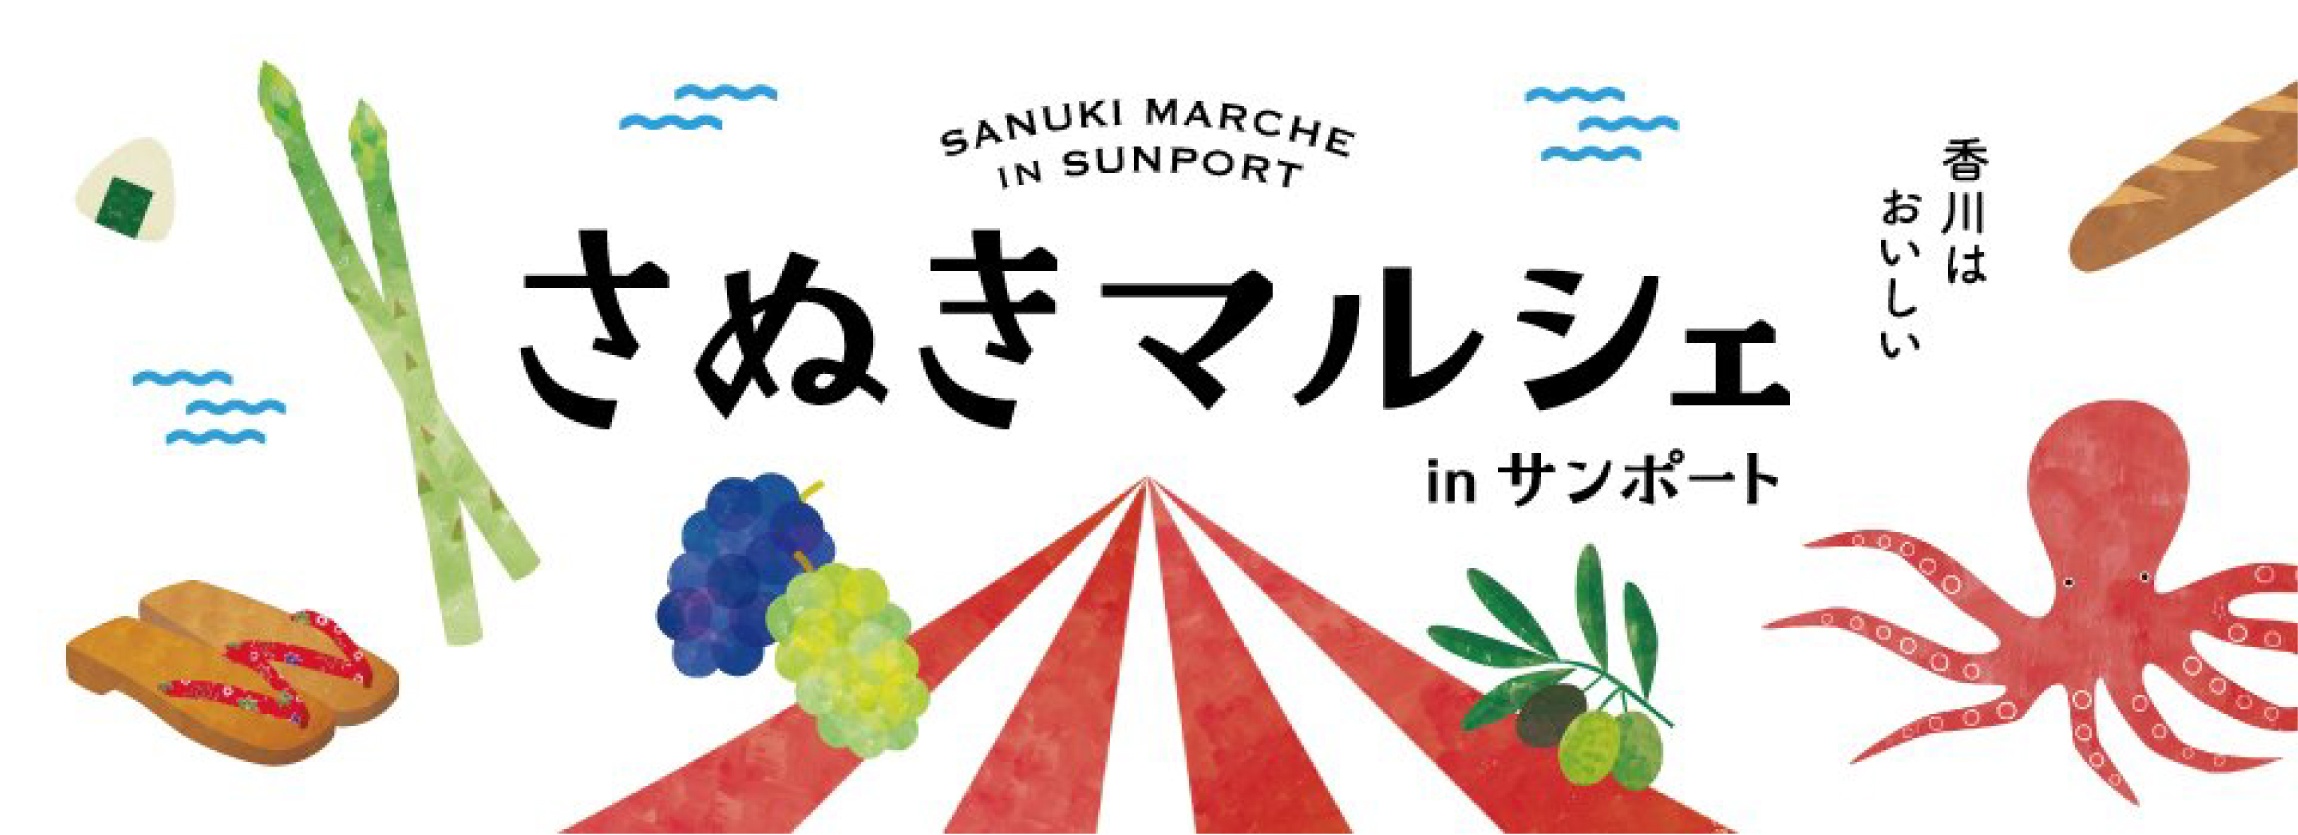 SANUKI MARCHE IN SUNPORT Sanuki Marche in Sunport Kagawa is delicious